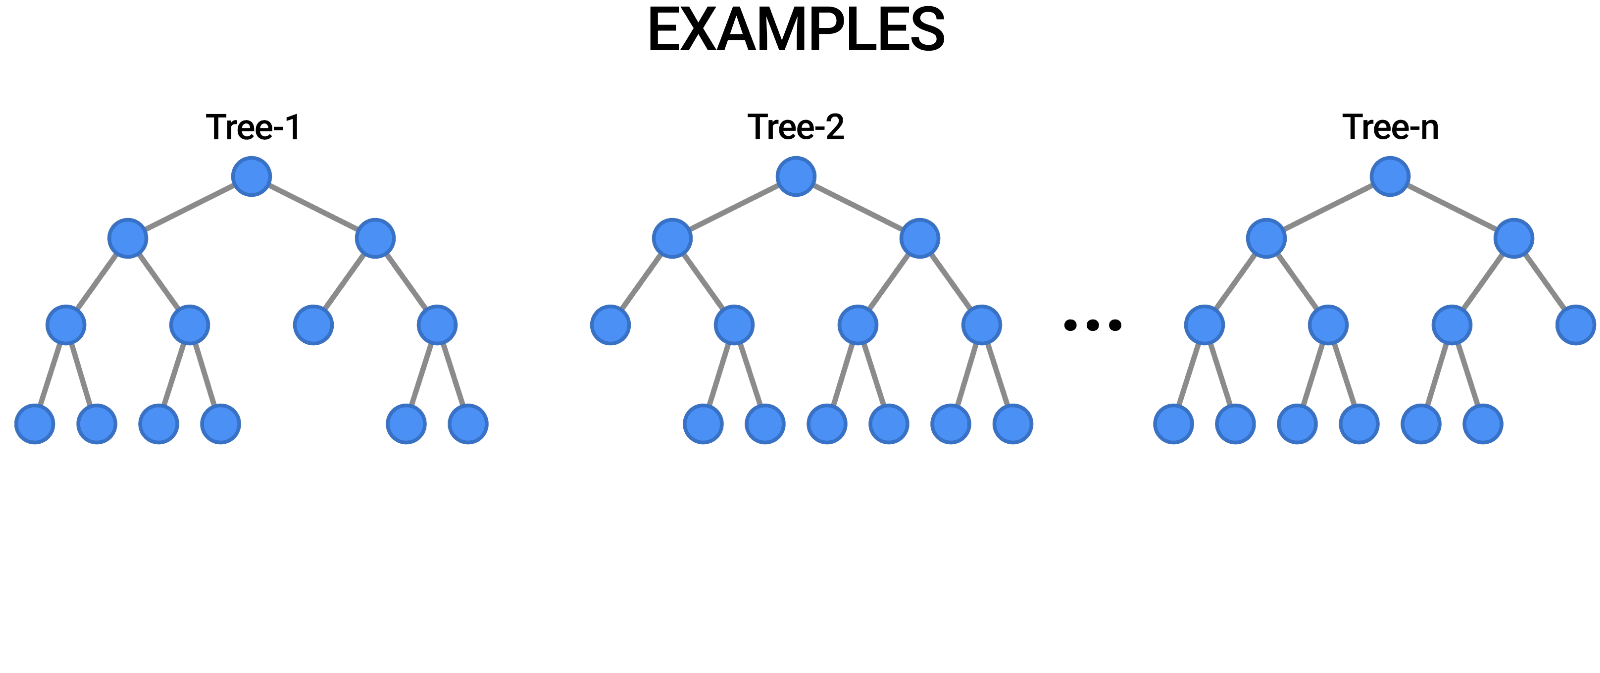 GIF showing Random Forest decision model